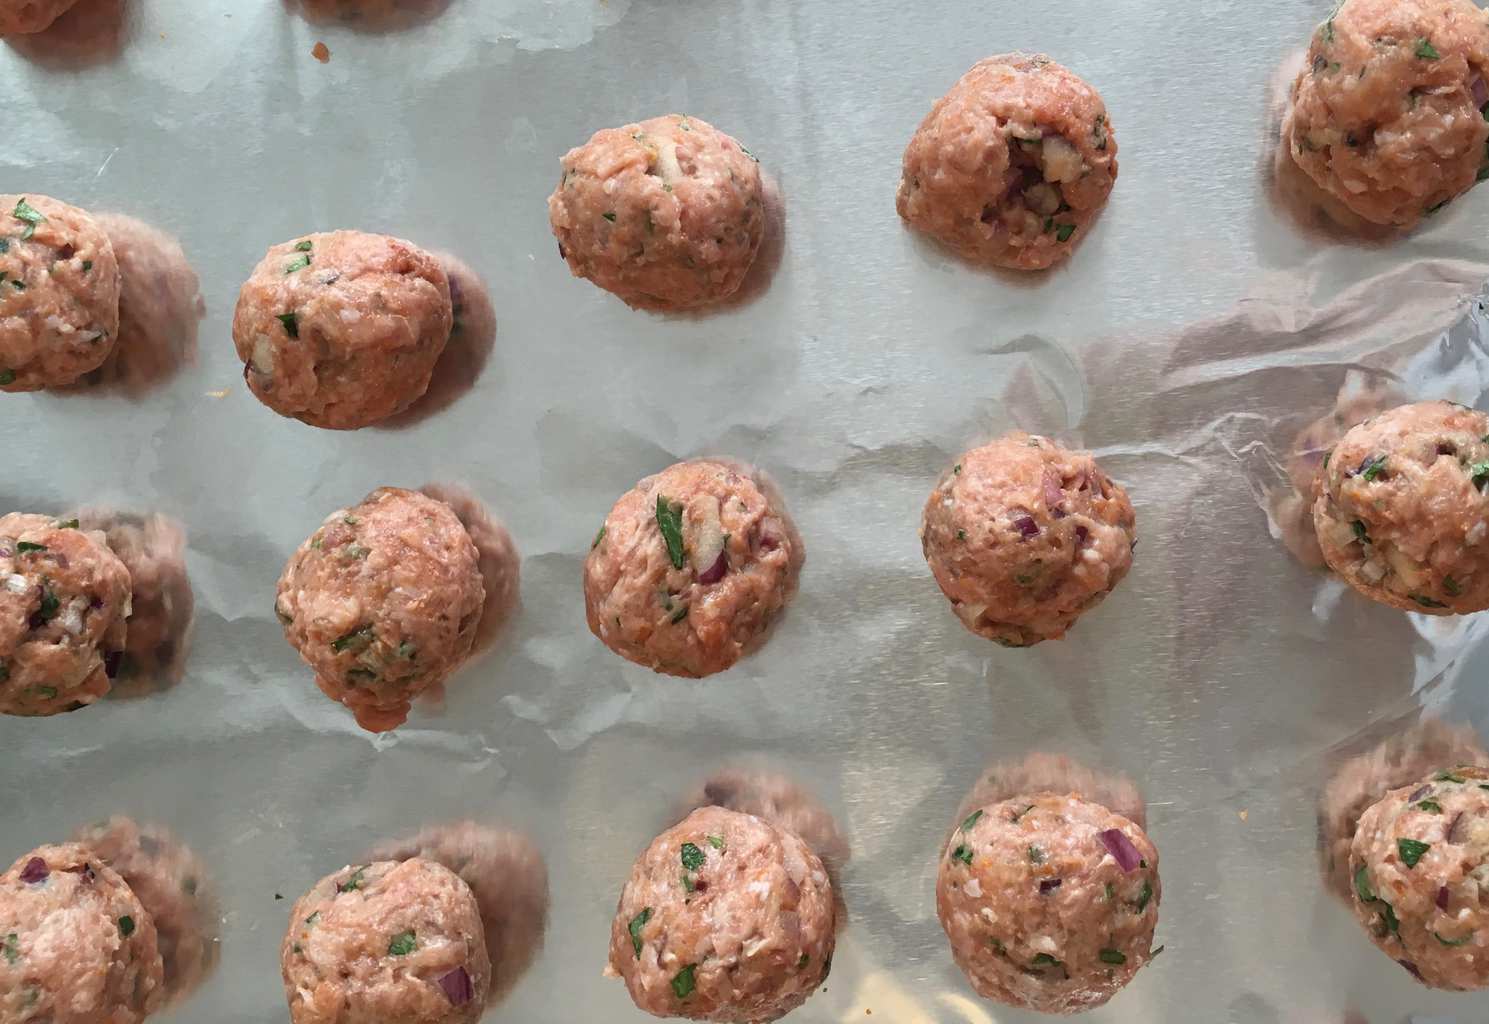 Making Chicken Meatballs